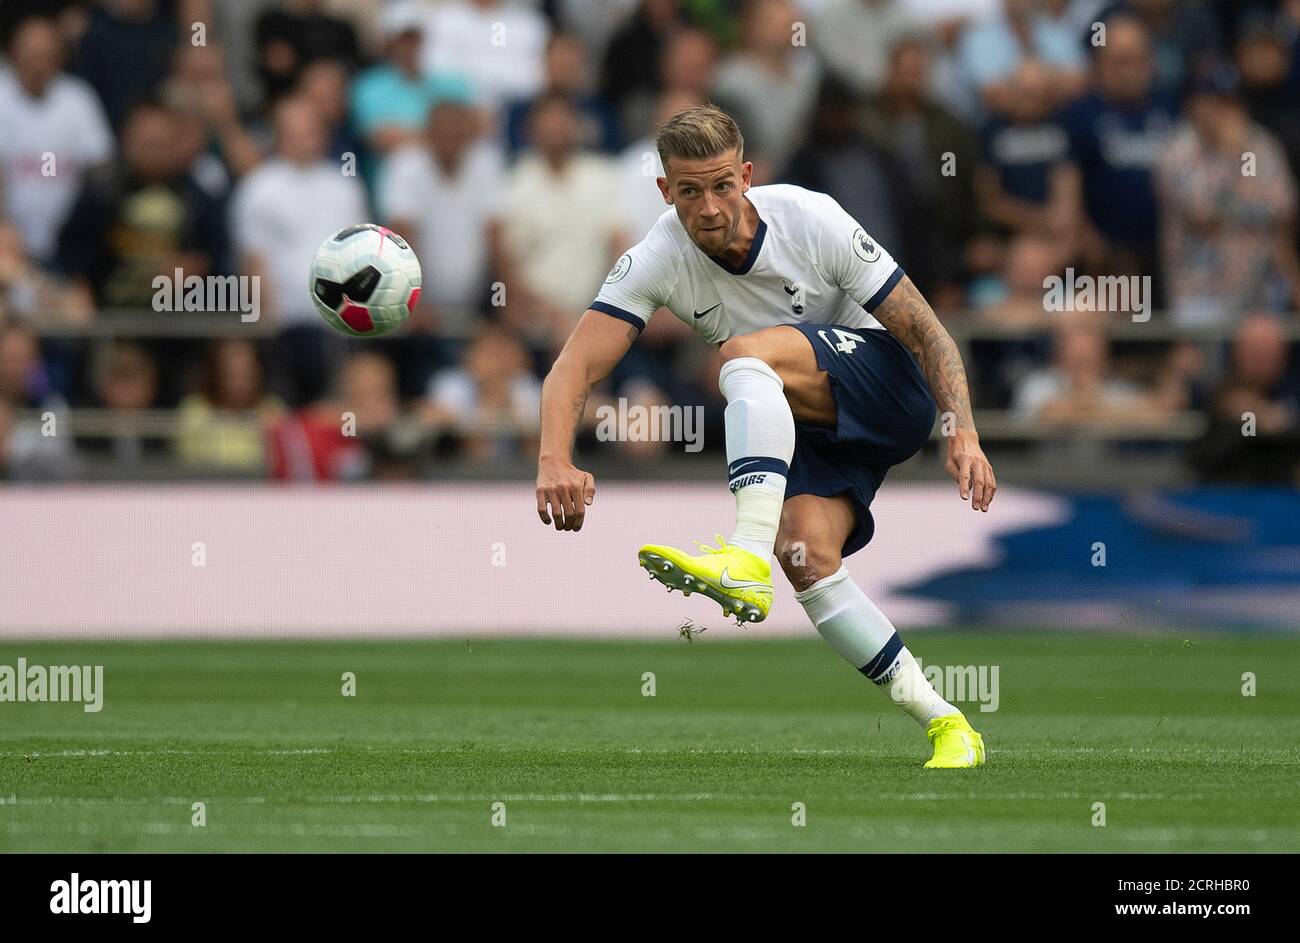 Toby Alderweirald. Aston Villa v Spurs CRÉDITO DE LA FOTO: © MARK PAIN / ALAMY FOTO DE STOCK Foto de stock